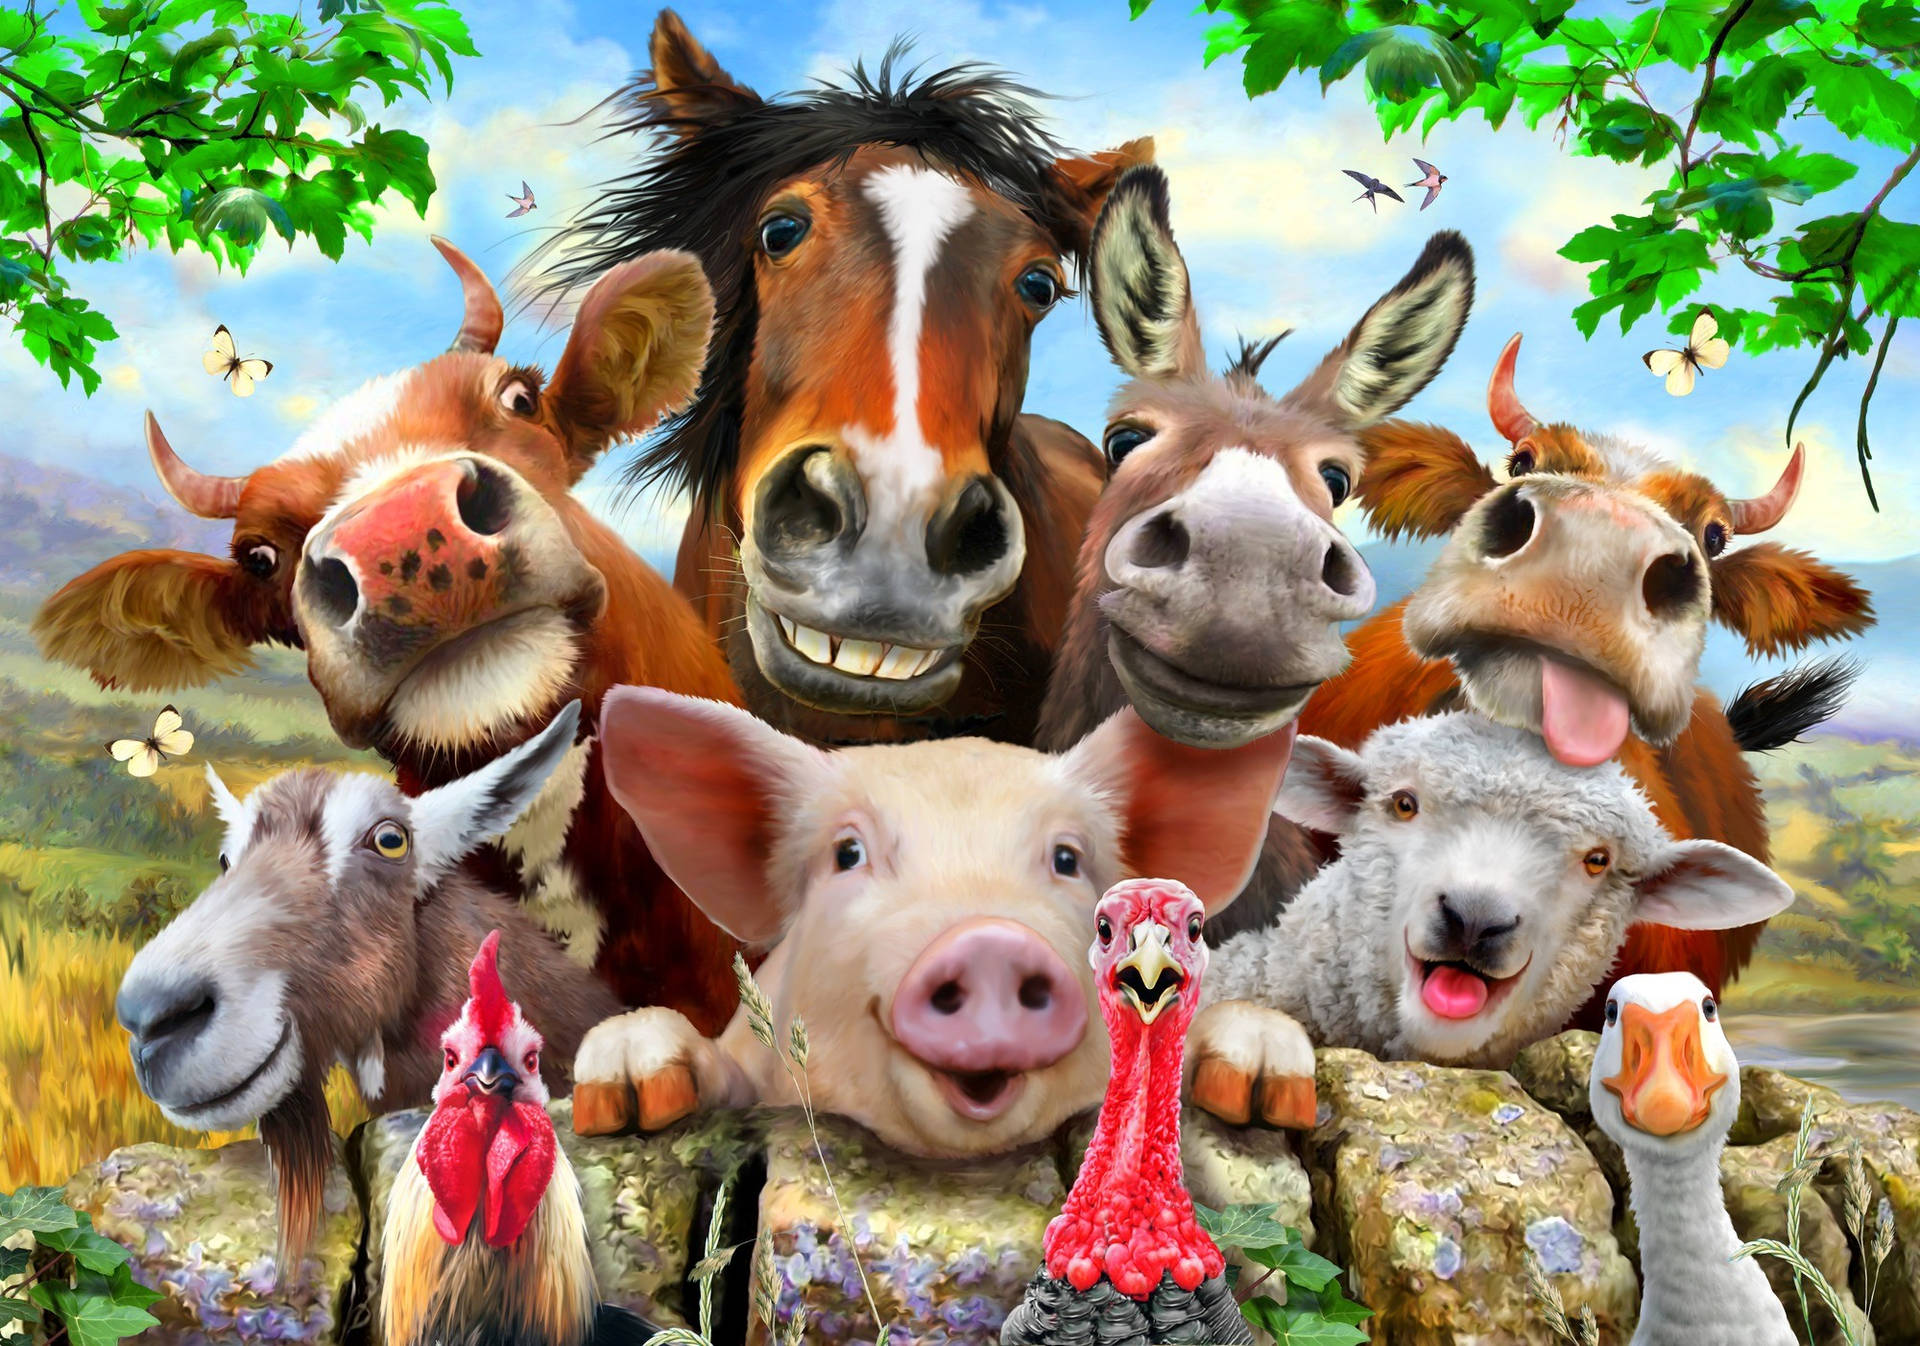 Cute Farm Animal Family Artwork Wallpaper